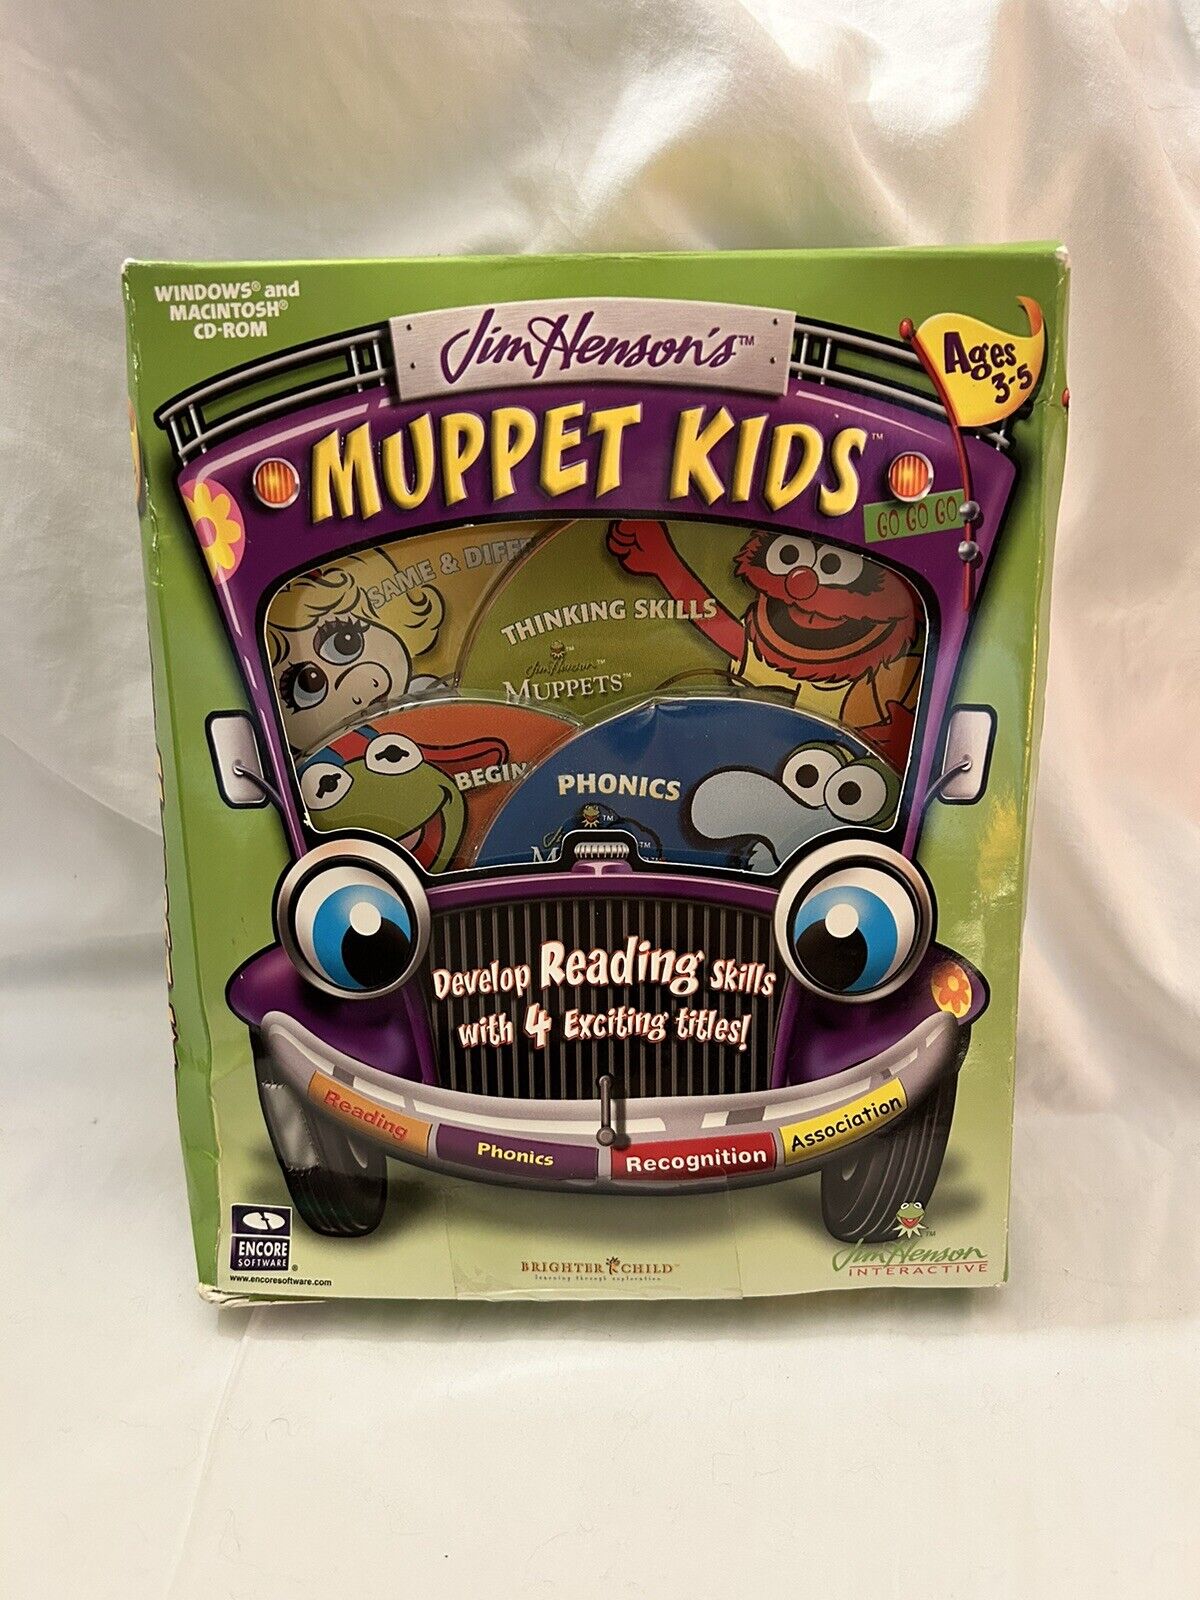 VERY RARE Jim Henson’s Interactive Muppet Kids COMPLETE CD ROM Child Reading Set